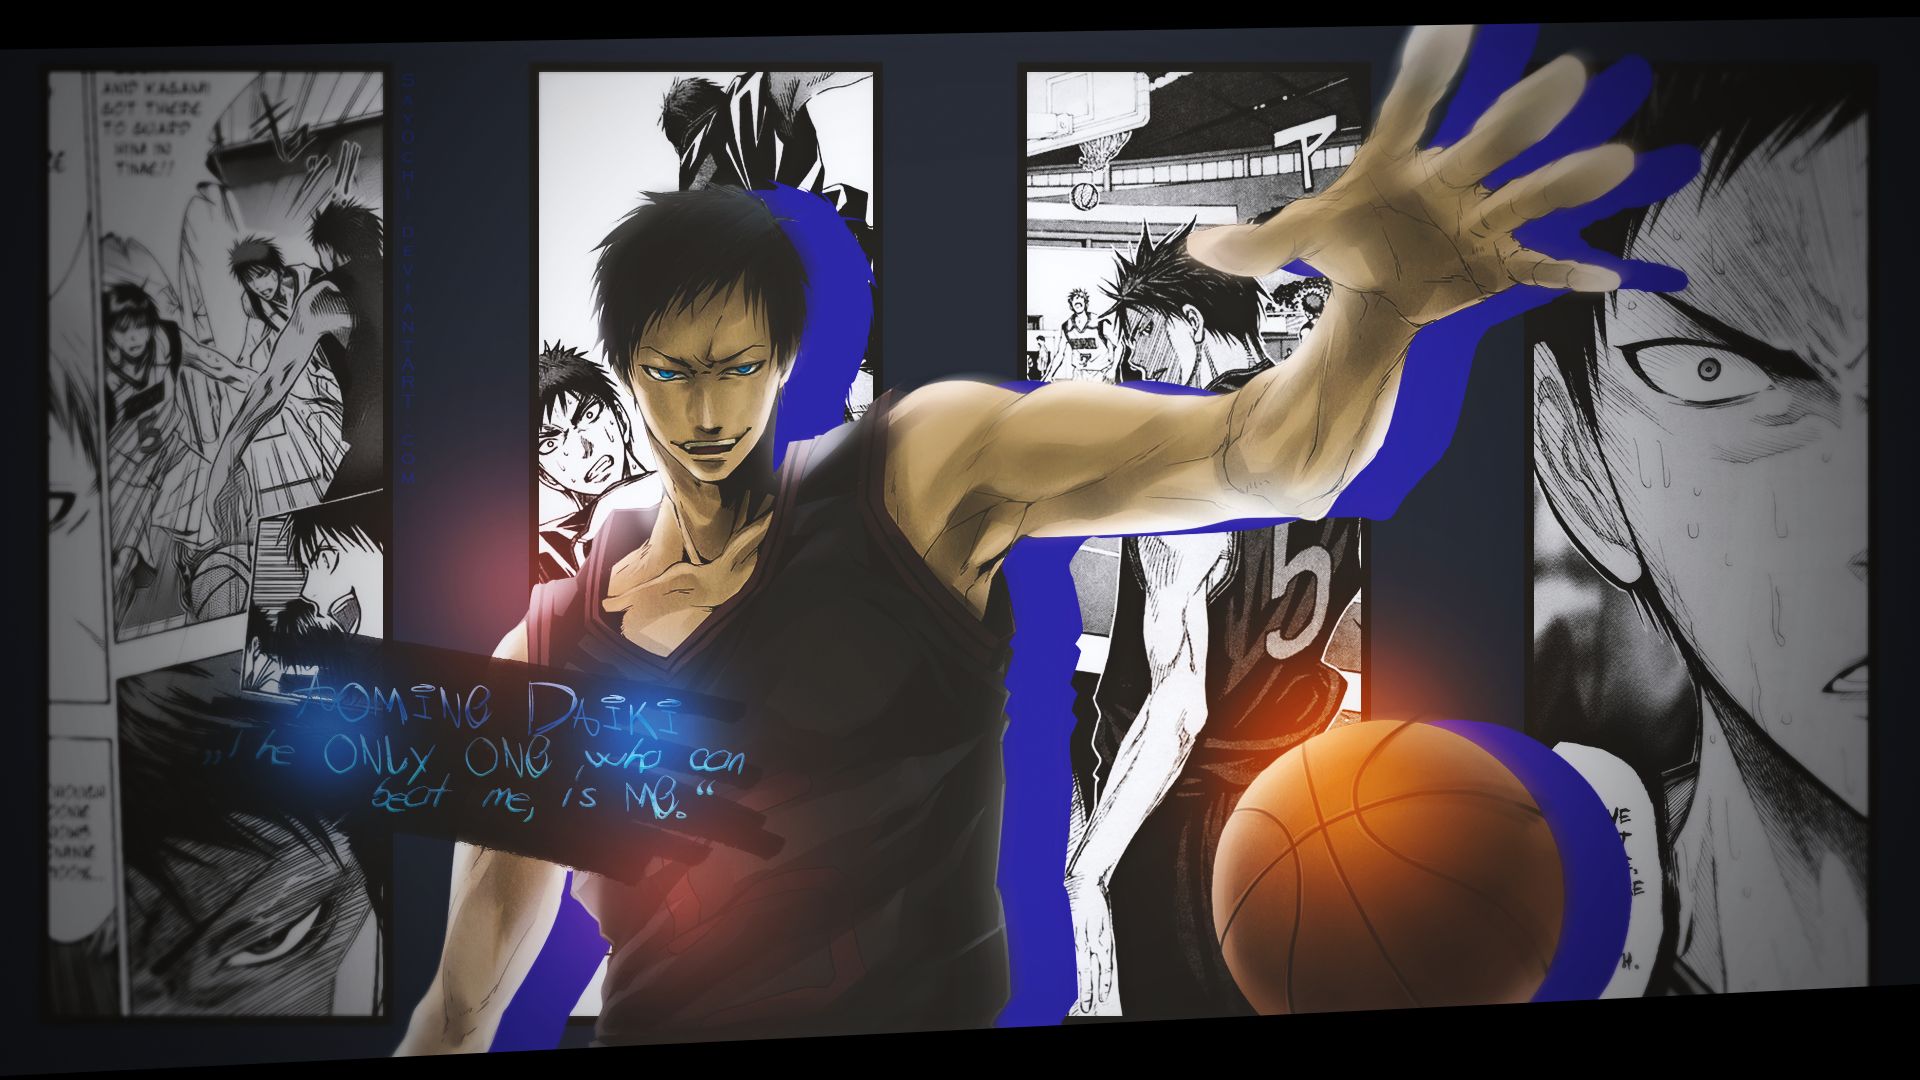 773019 descargar imagen animado, kuroko no basket, daiki aomine: fondos de pantalla y protectores de pantalla gratis